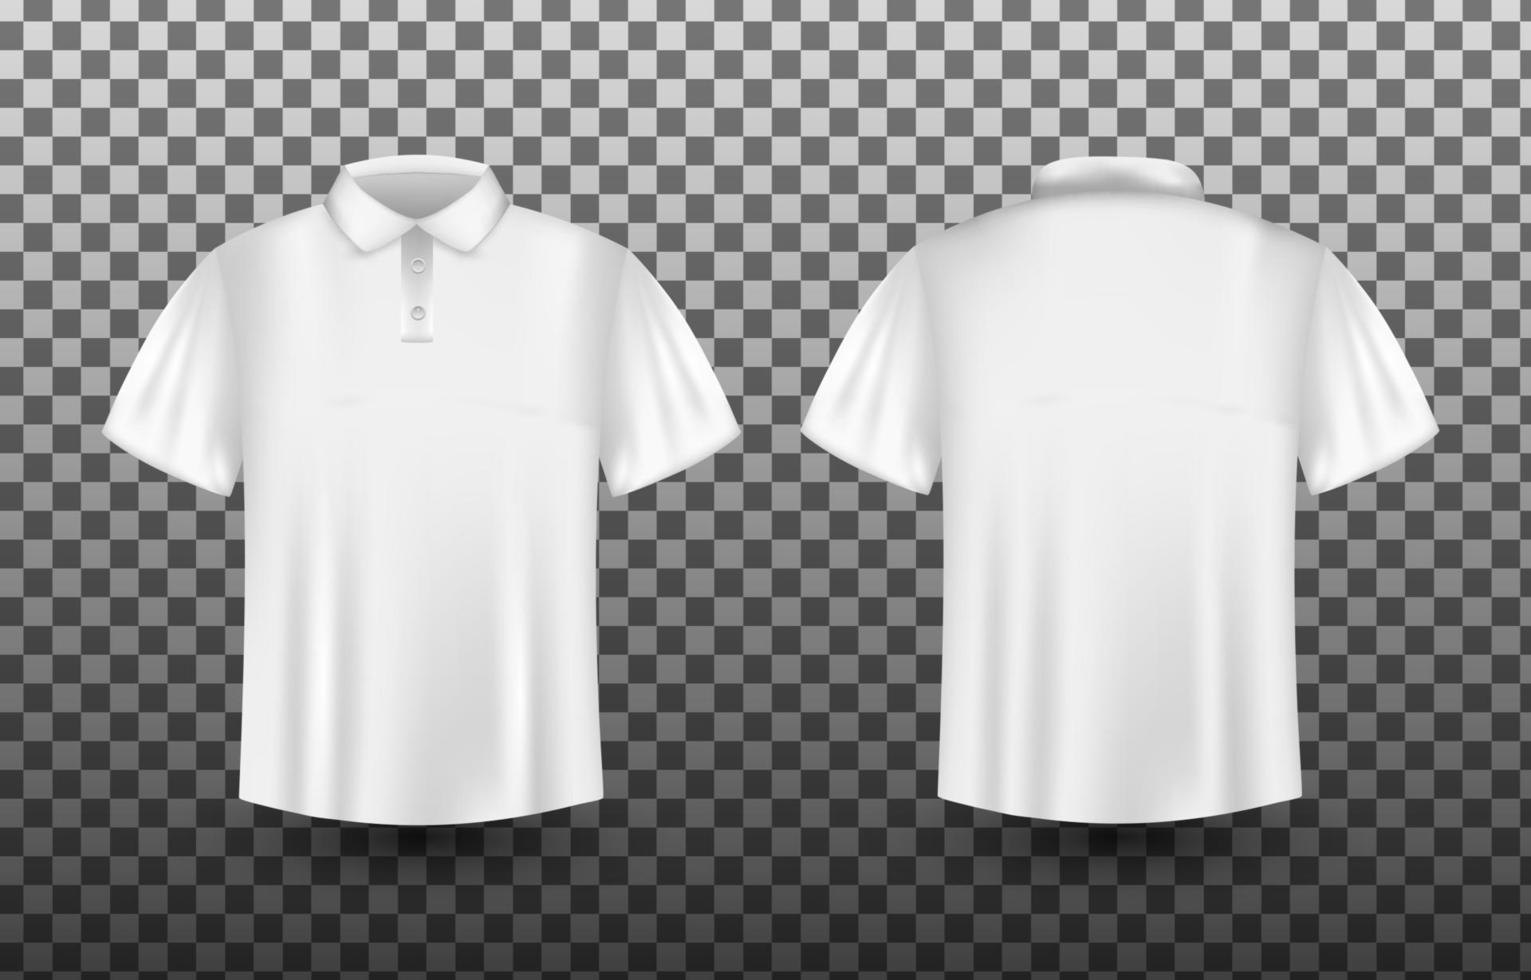 Realistic White Polo Shirt Mockup vector